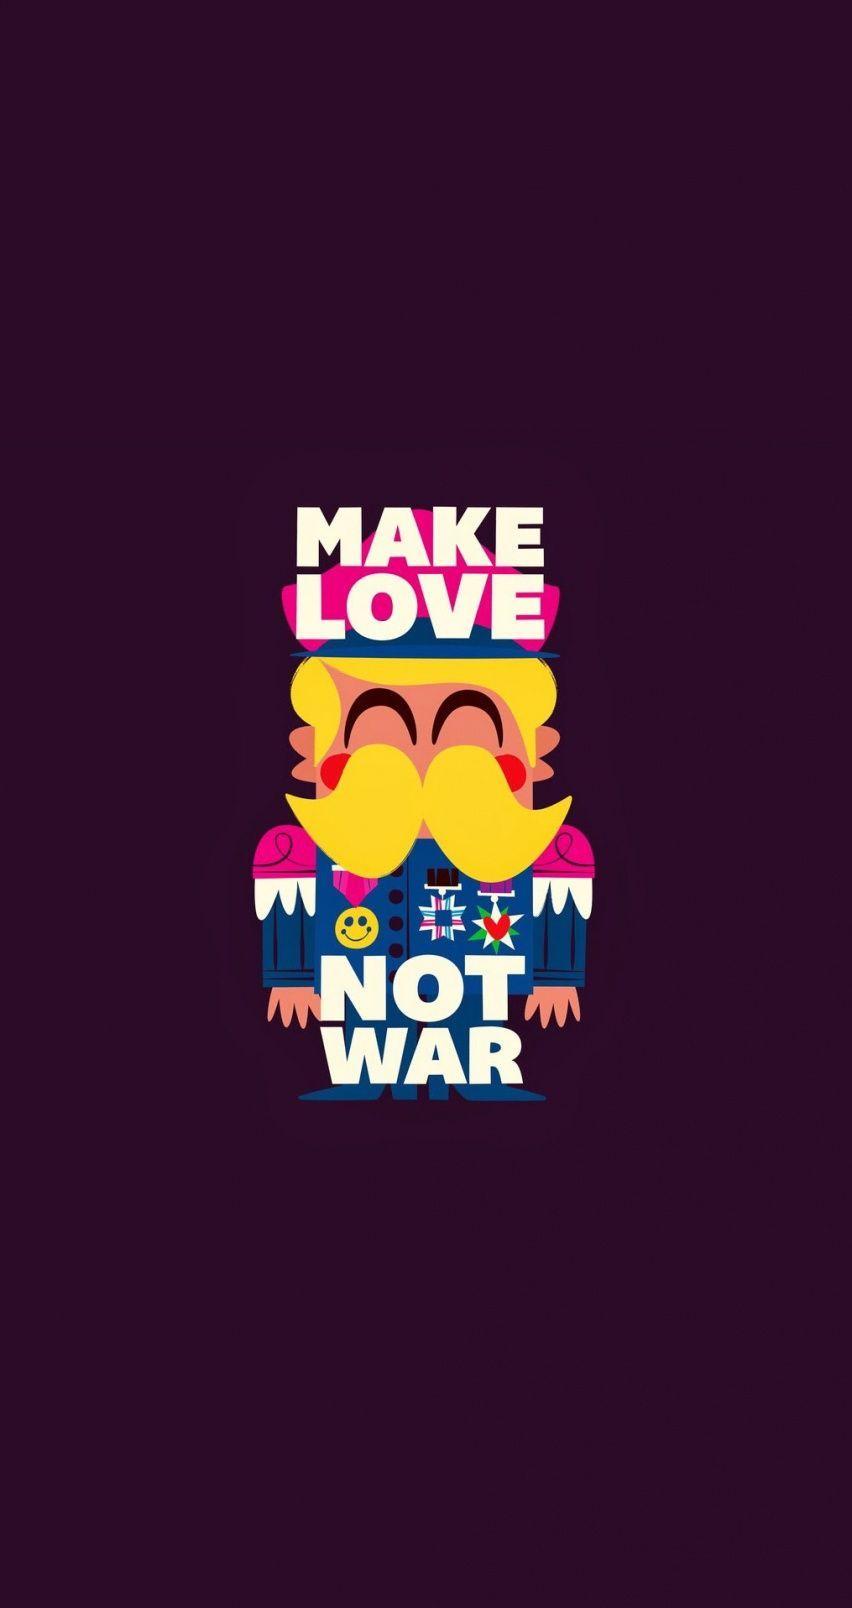 Make love not war. Tap image for more cartoon wallpaper!